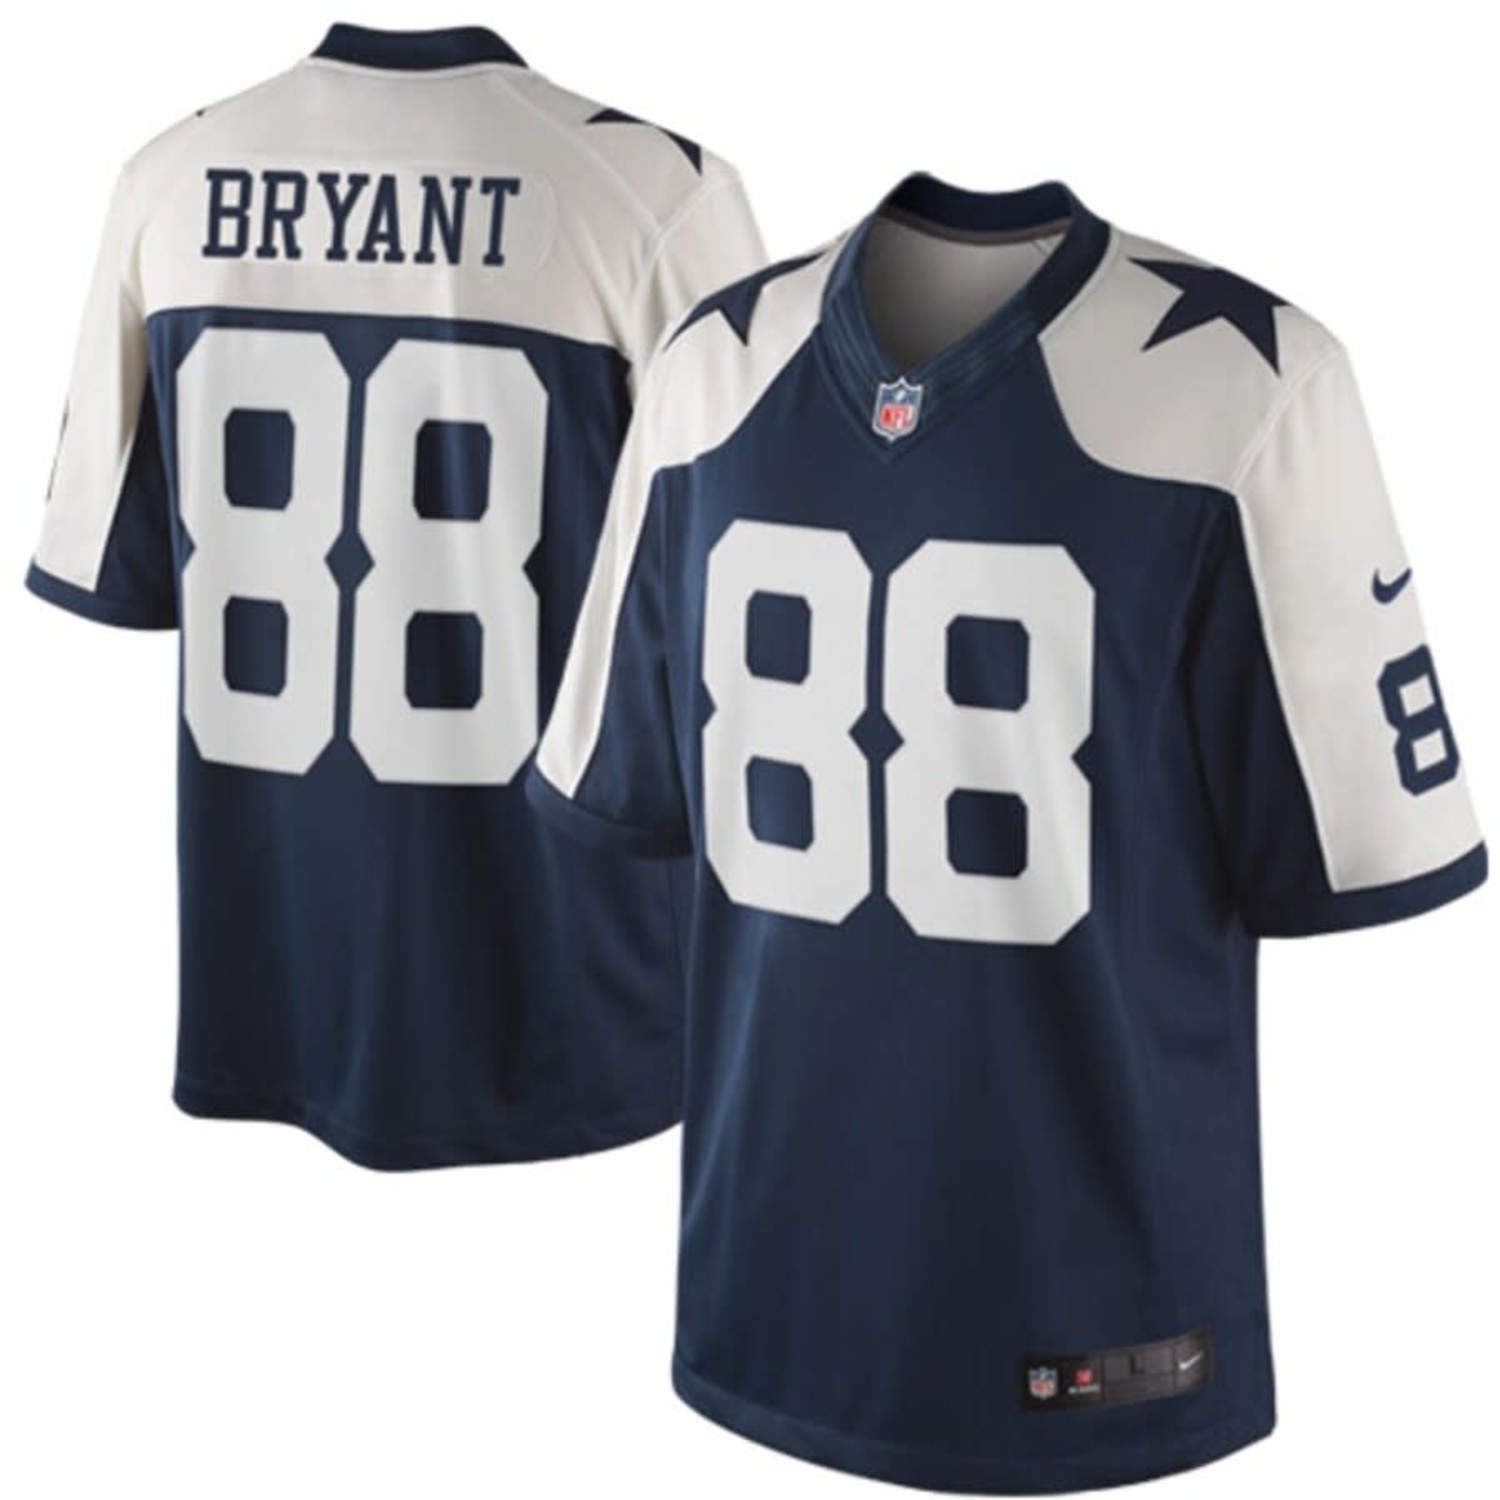 Nike NFL Dallas Cowboys M Nike Dez Bryant #88 Limited Jersey Throwback  Navy/White M